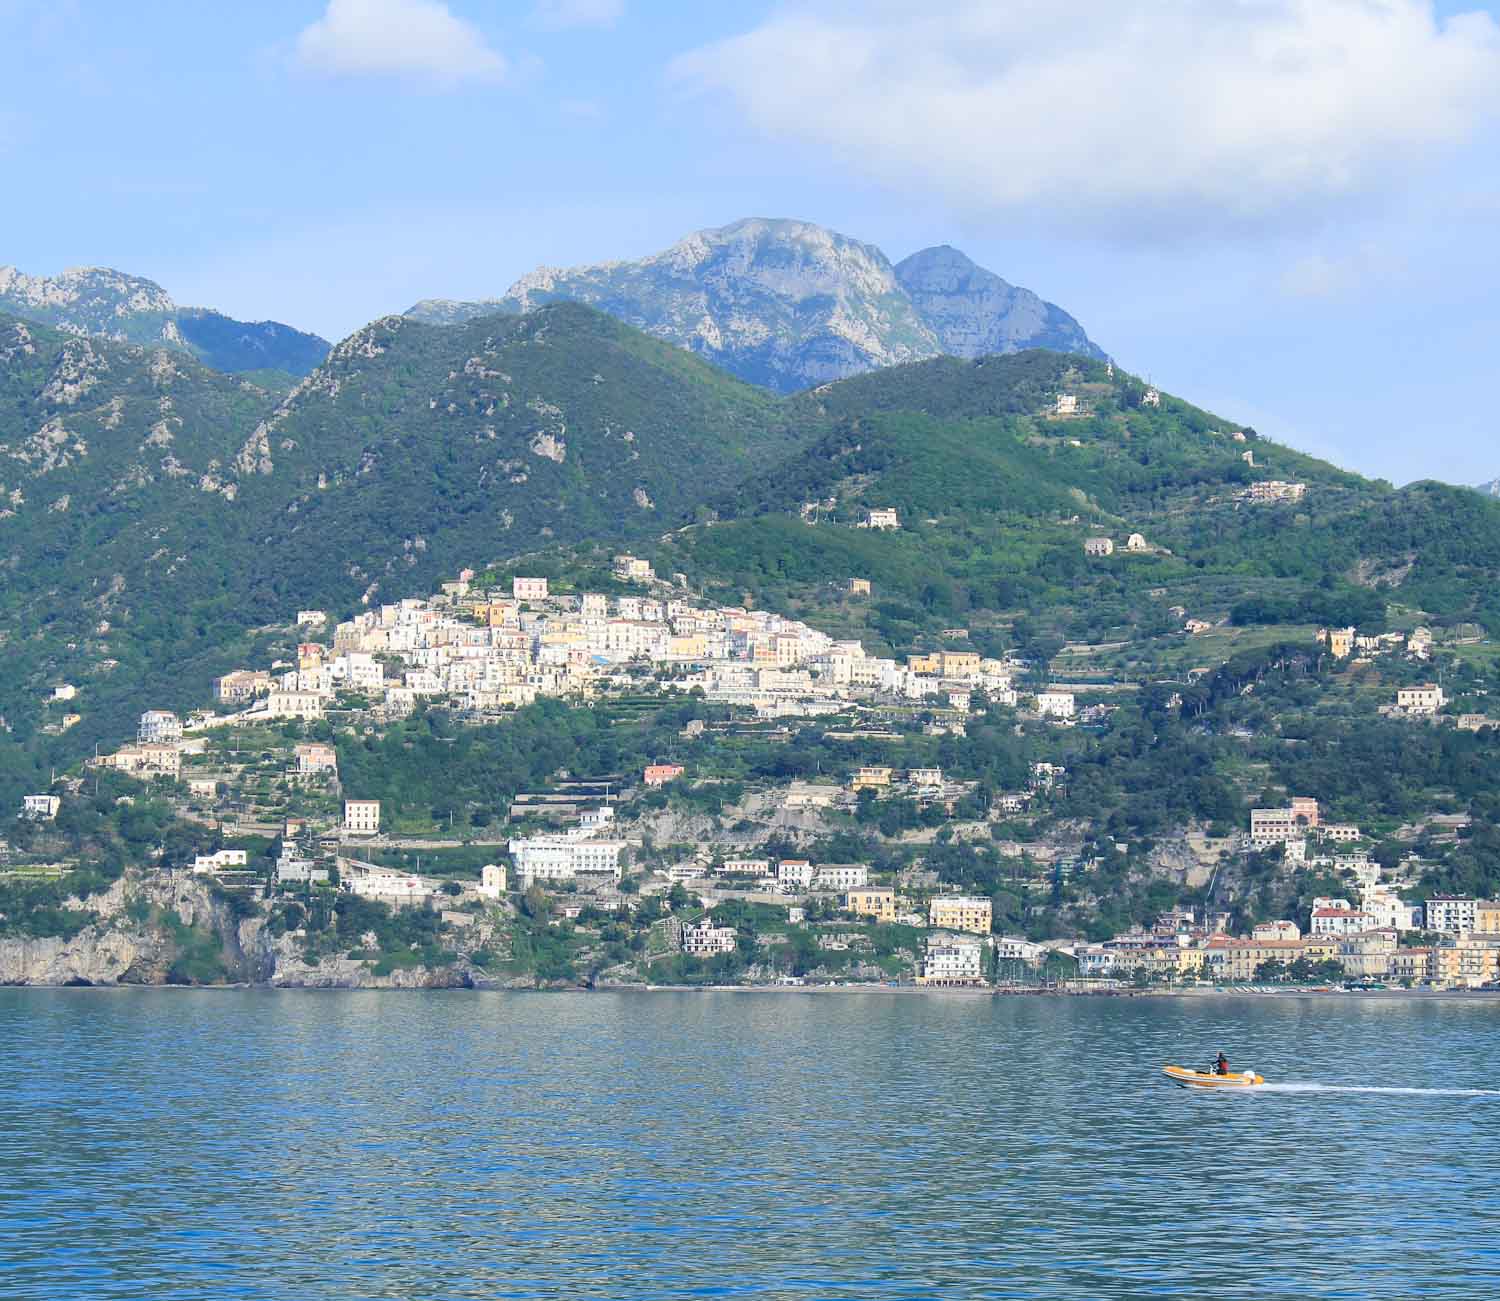 Cruise along the Amalfi Coast